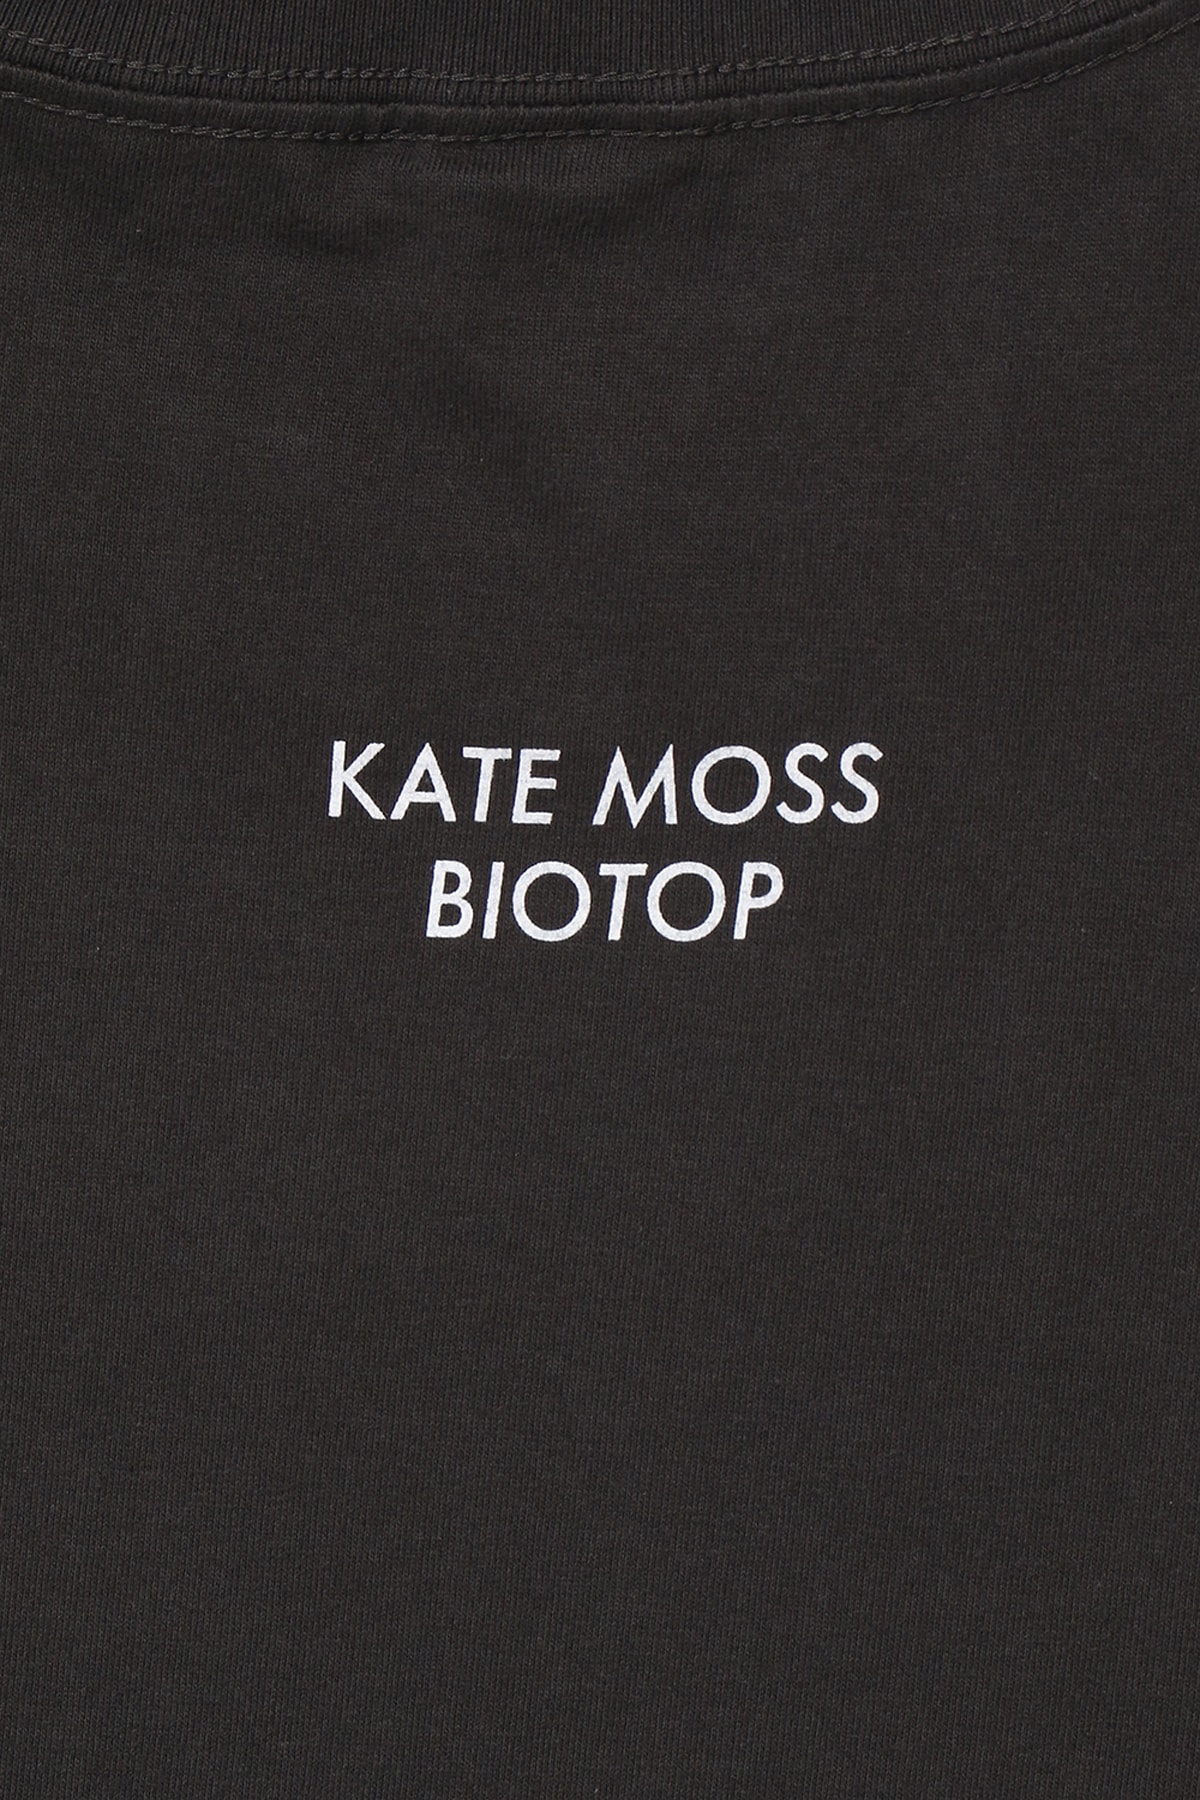 BIOTOP 推出 Kate Moss x David Sims 最新联名 TShirt Hypebeast